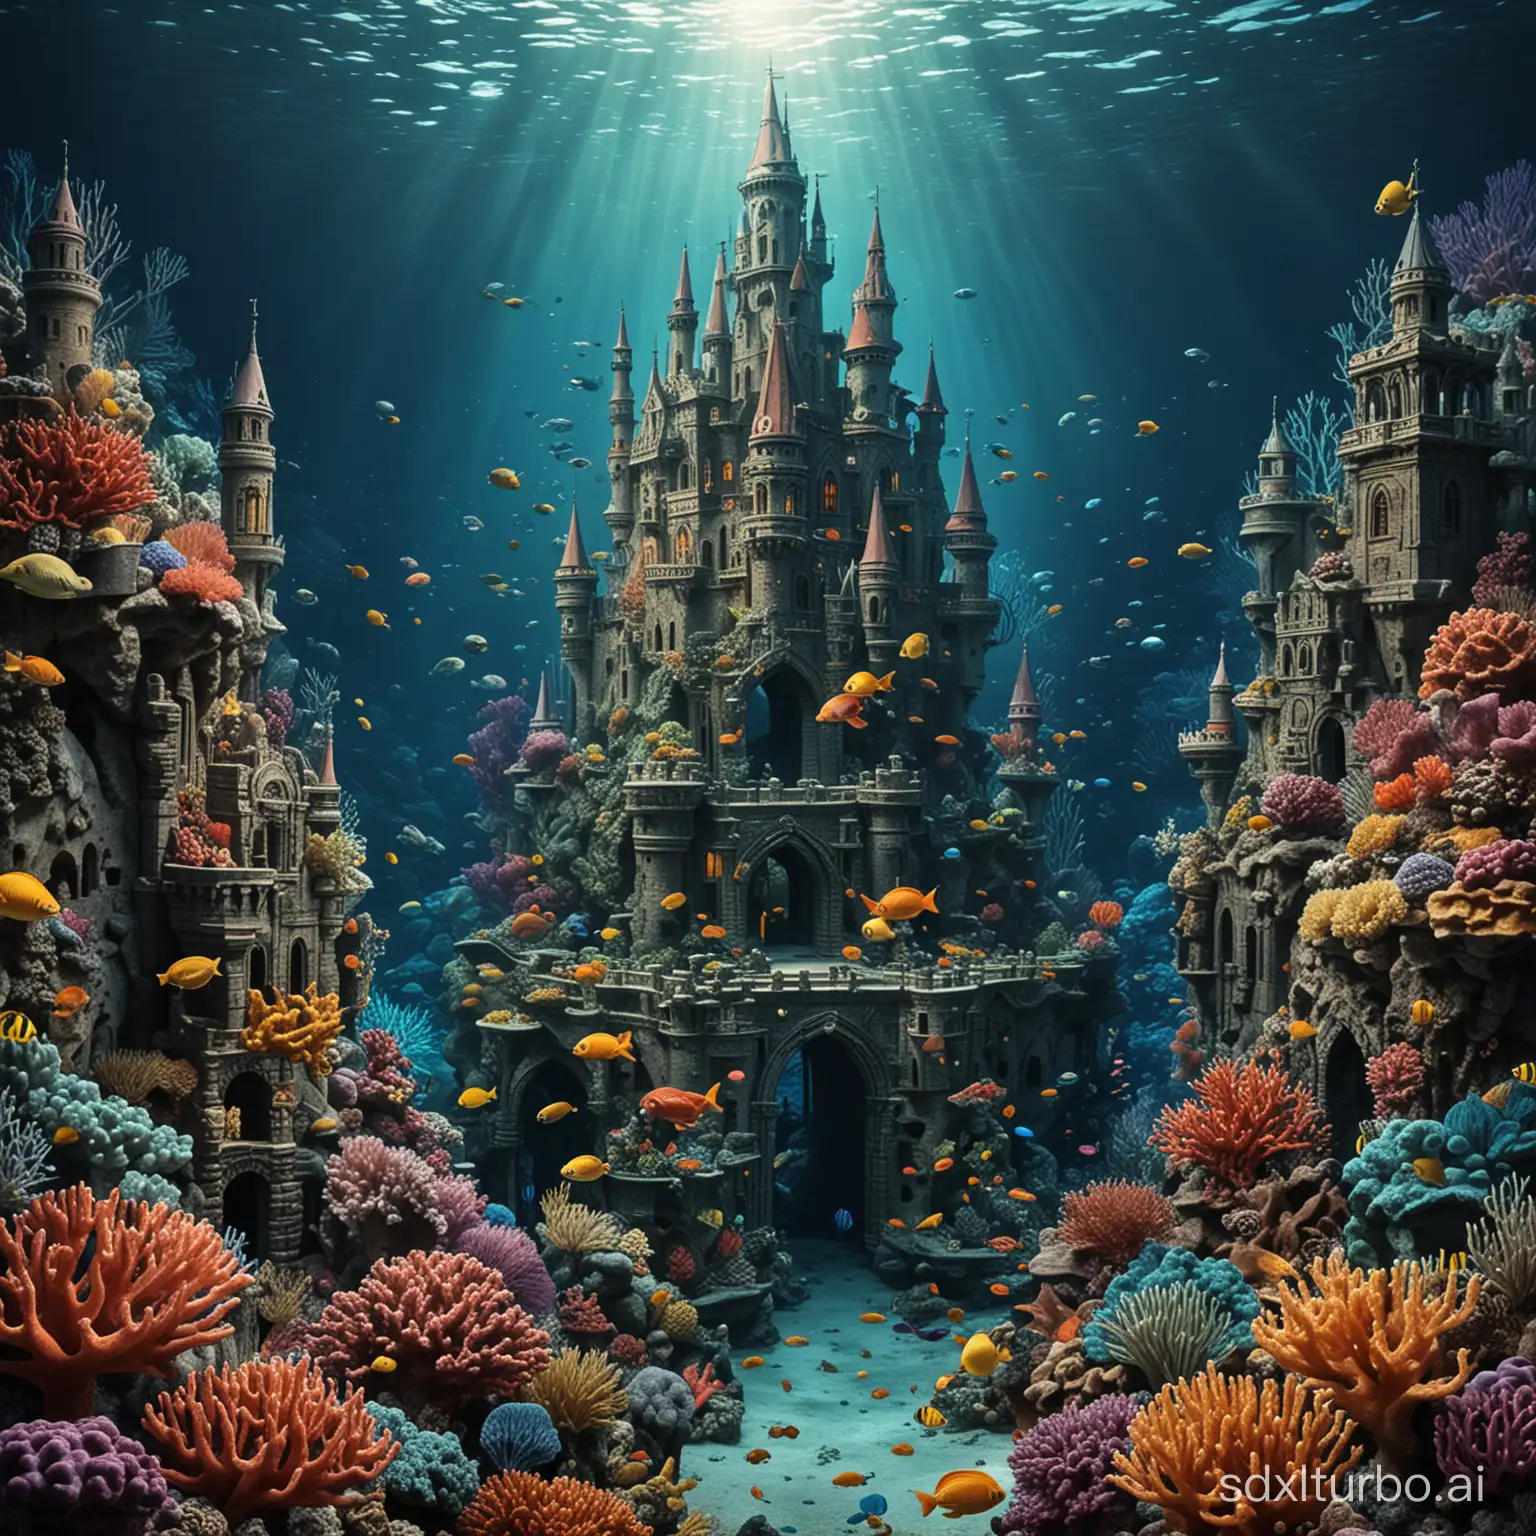 Vibrant-Deep-Sea-Castle-Scene-with-Diverse-Fish-and-Coral